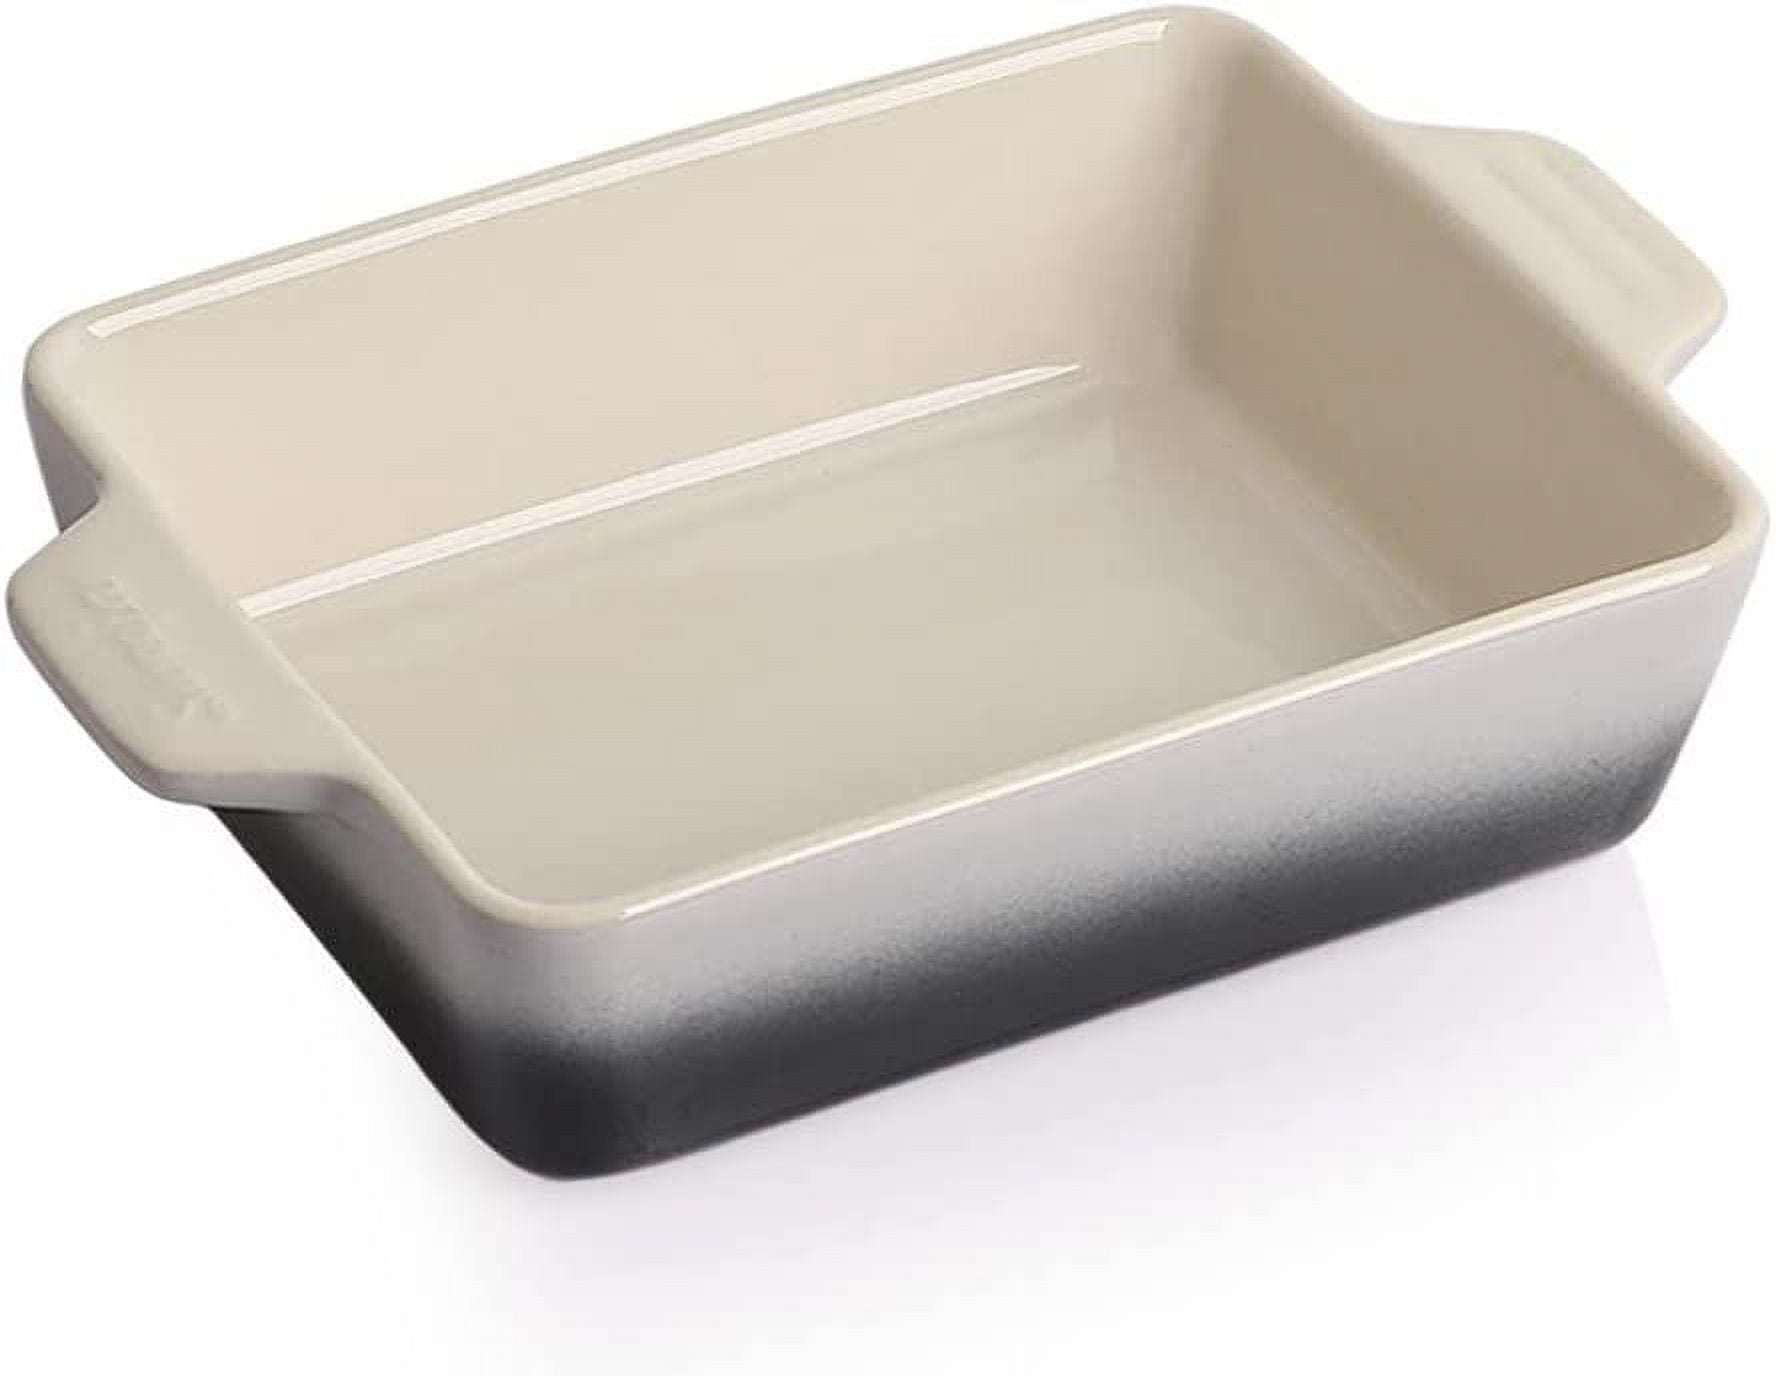 SWEEJAR Ceramic Baking Dish - Rectangular Small Baking Pan - with Double  Handles - 22oz Gradient Gray